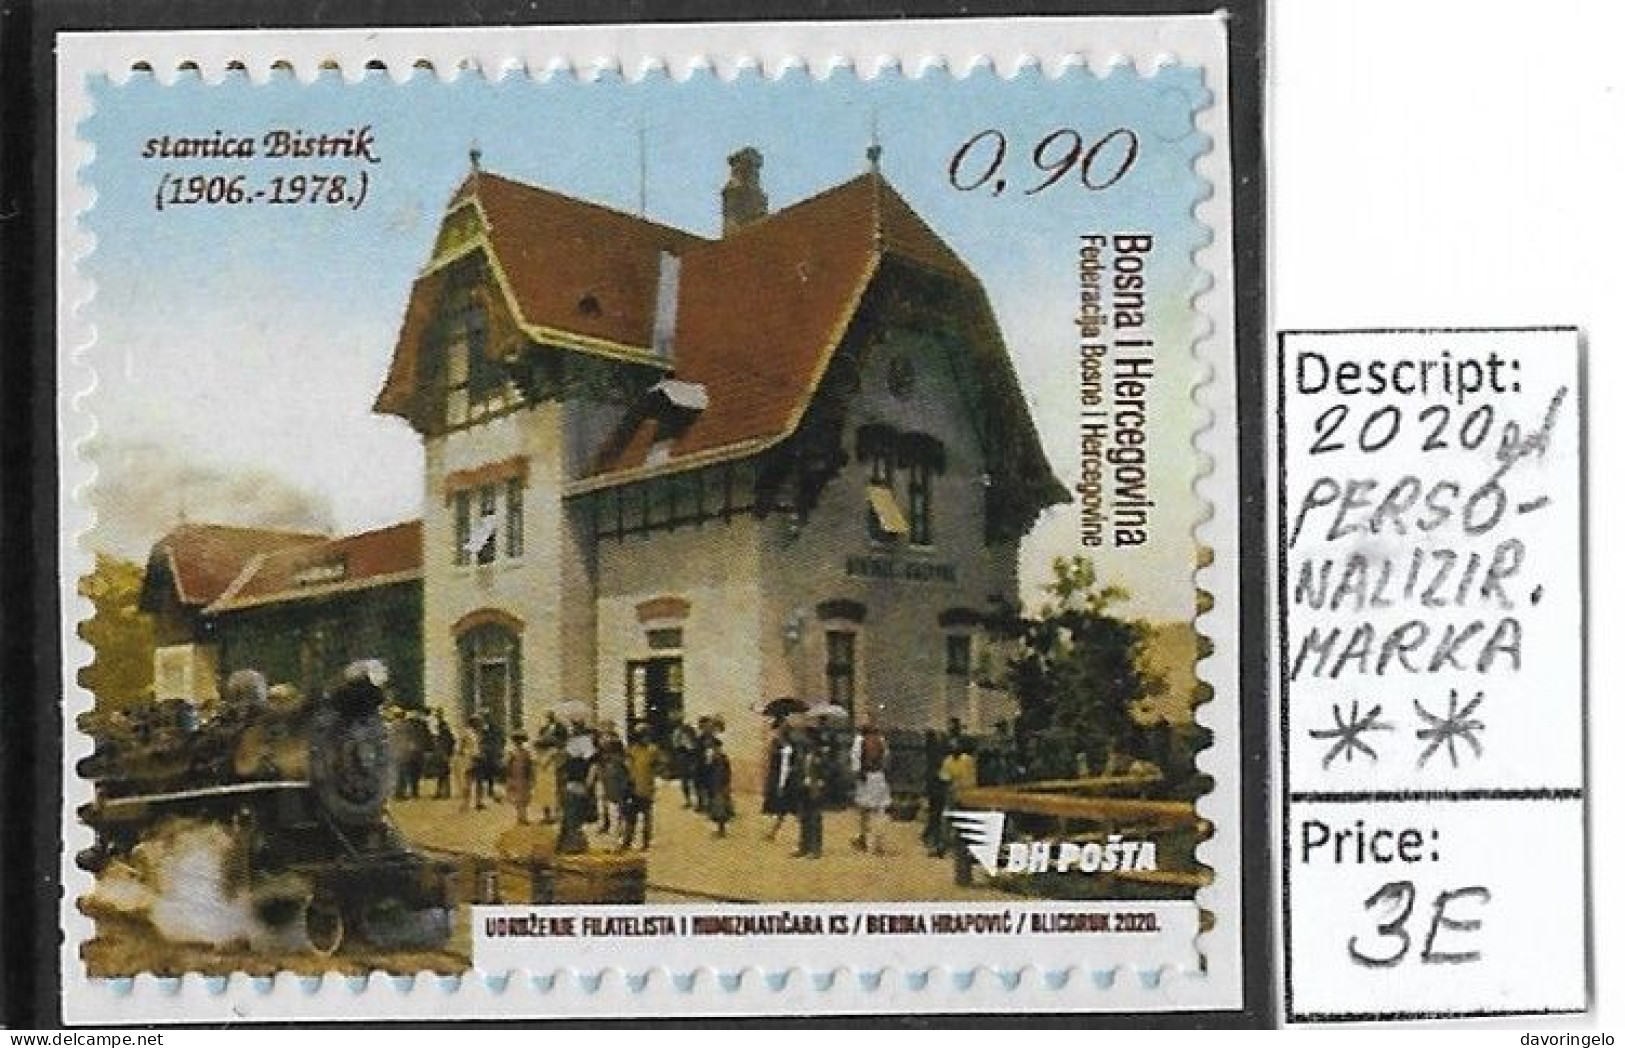 Bosnia-Herzegovina/BH Posta-Sarajevo/UFNKS, 2020 Year, Personalized Stamp Of UFNKS - Bosnia And Herzegovina